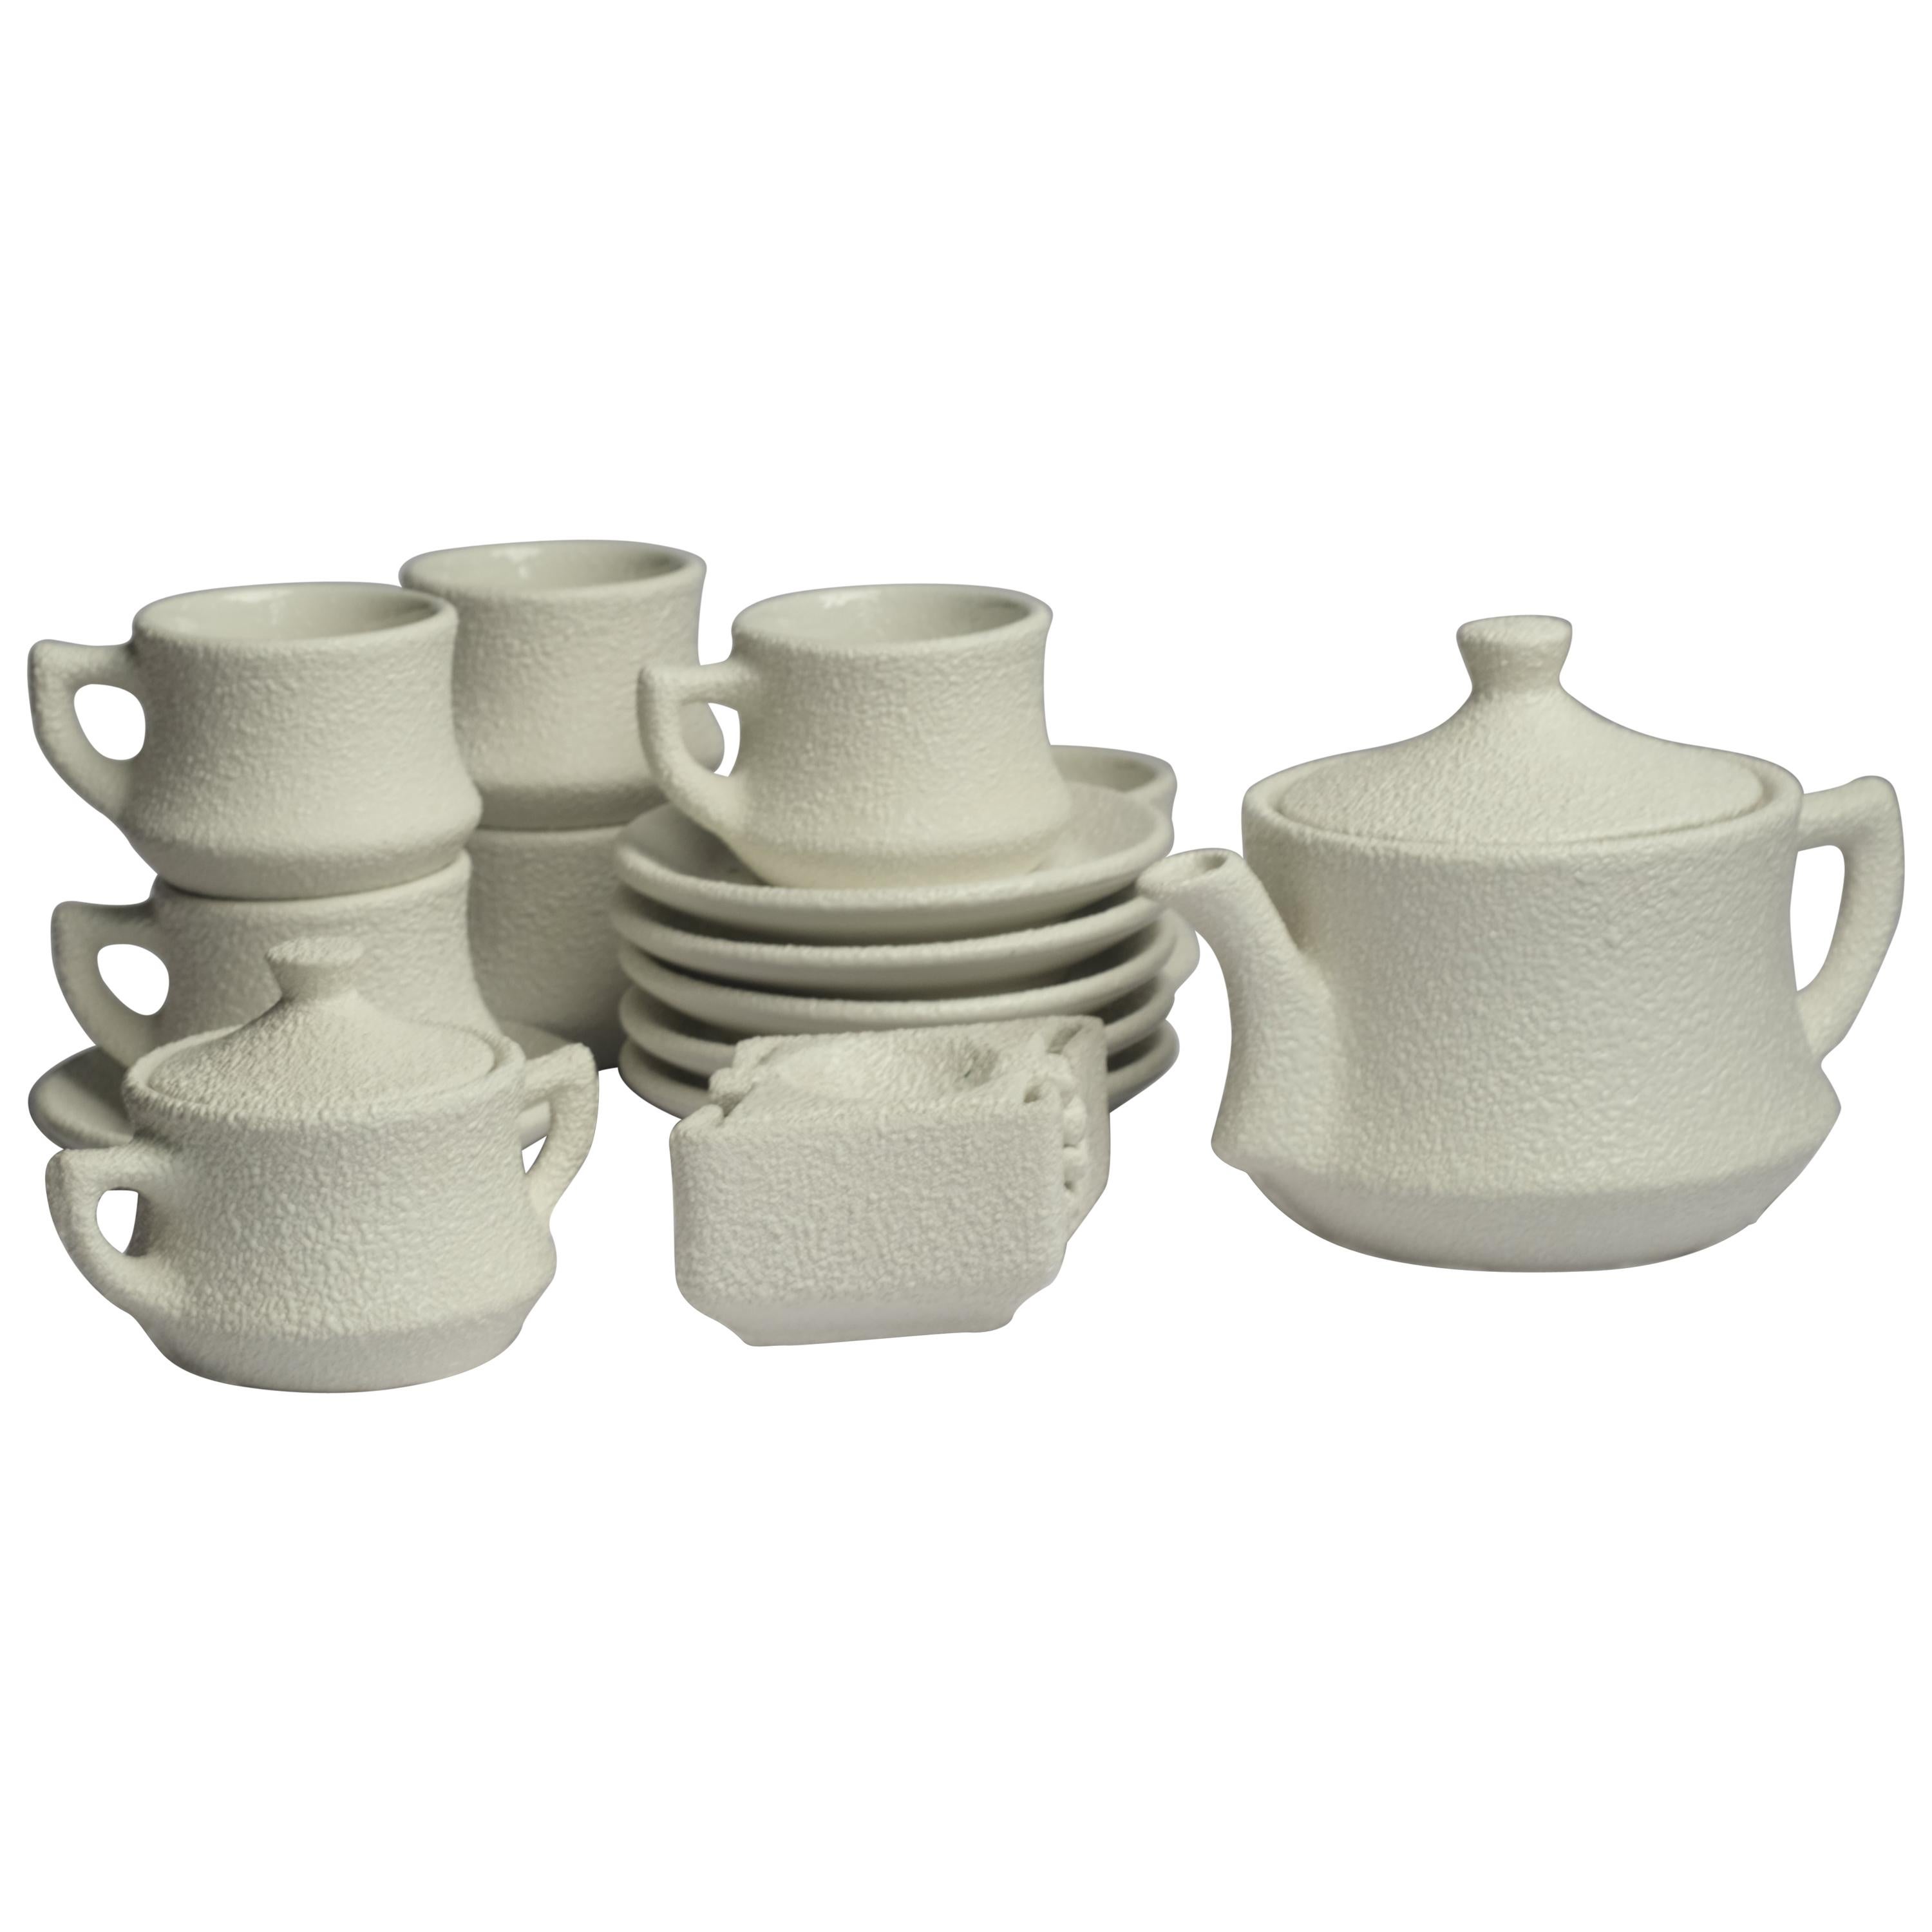 Modern Ceramic Coffee/Tea Set in Sand Textured Stucco Finish